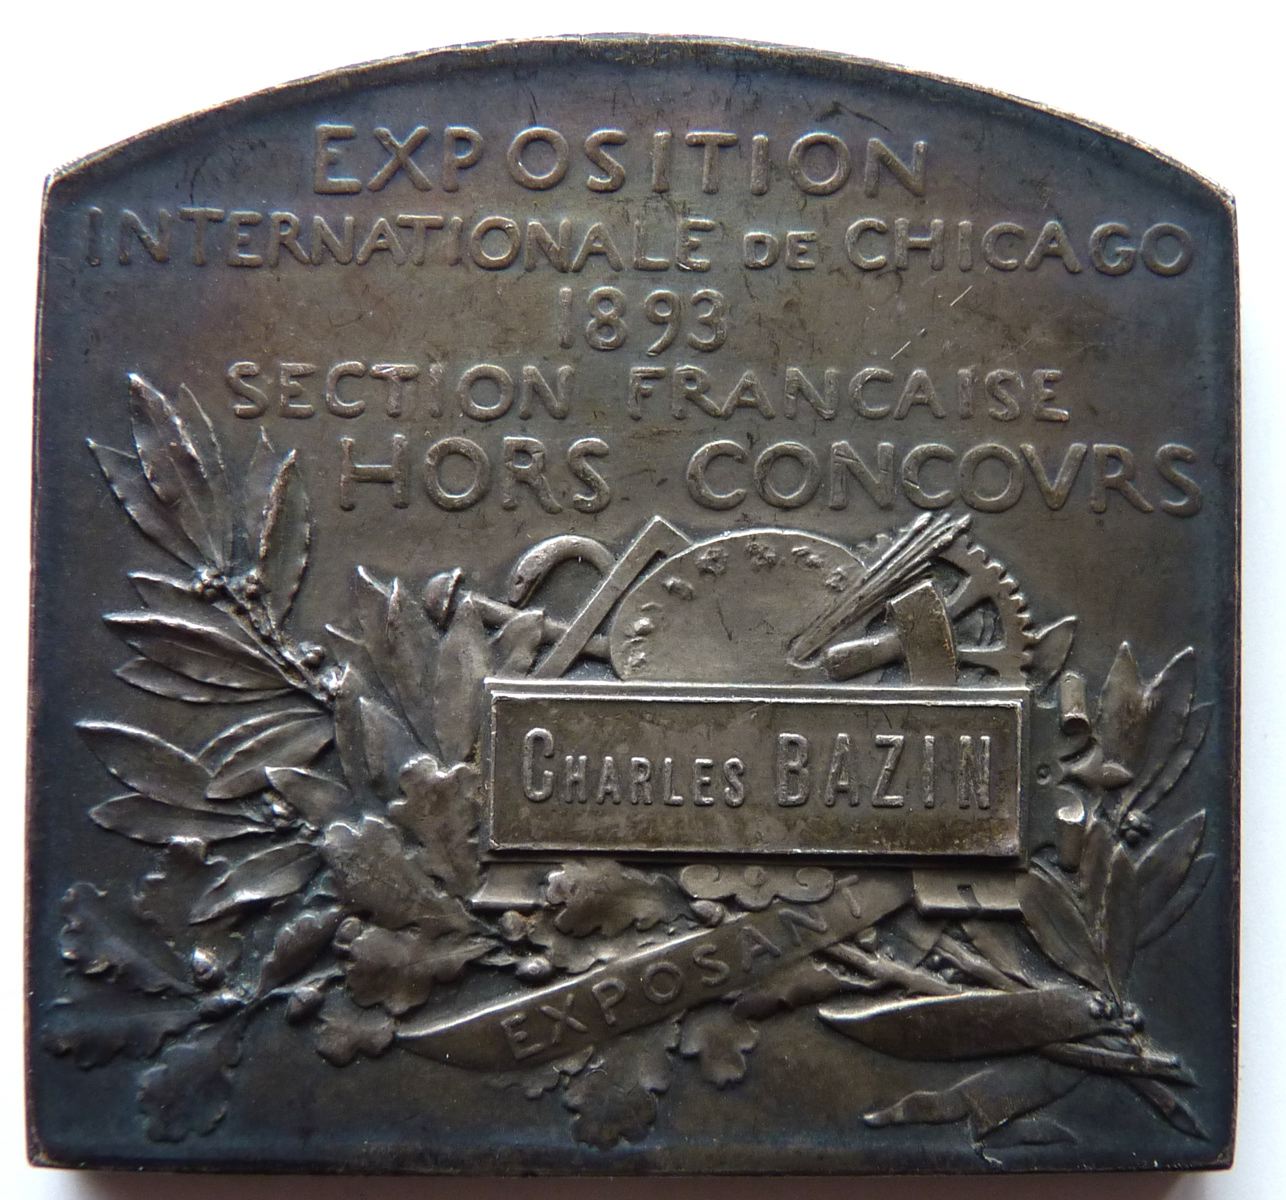 Exposition internationale de Chicago 1893